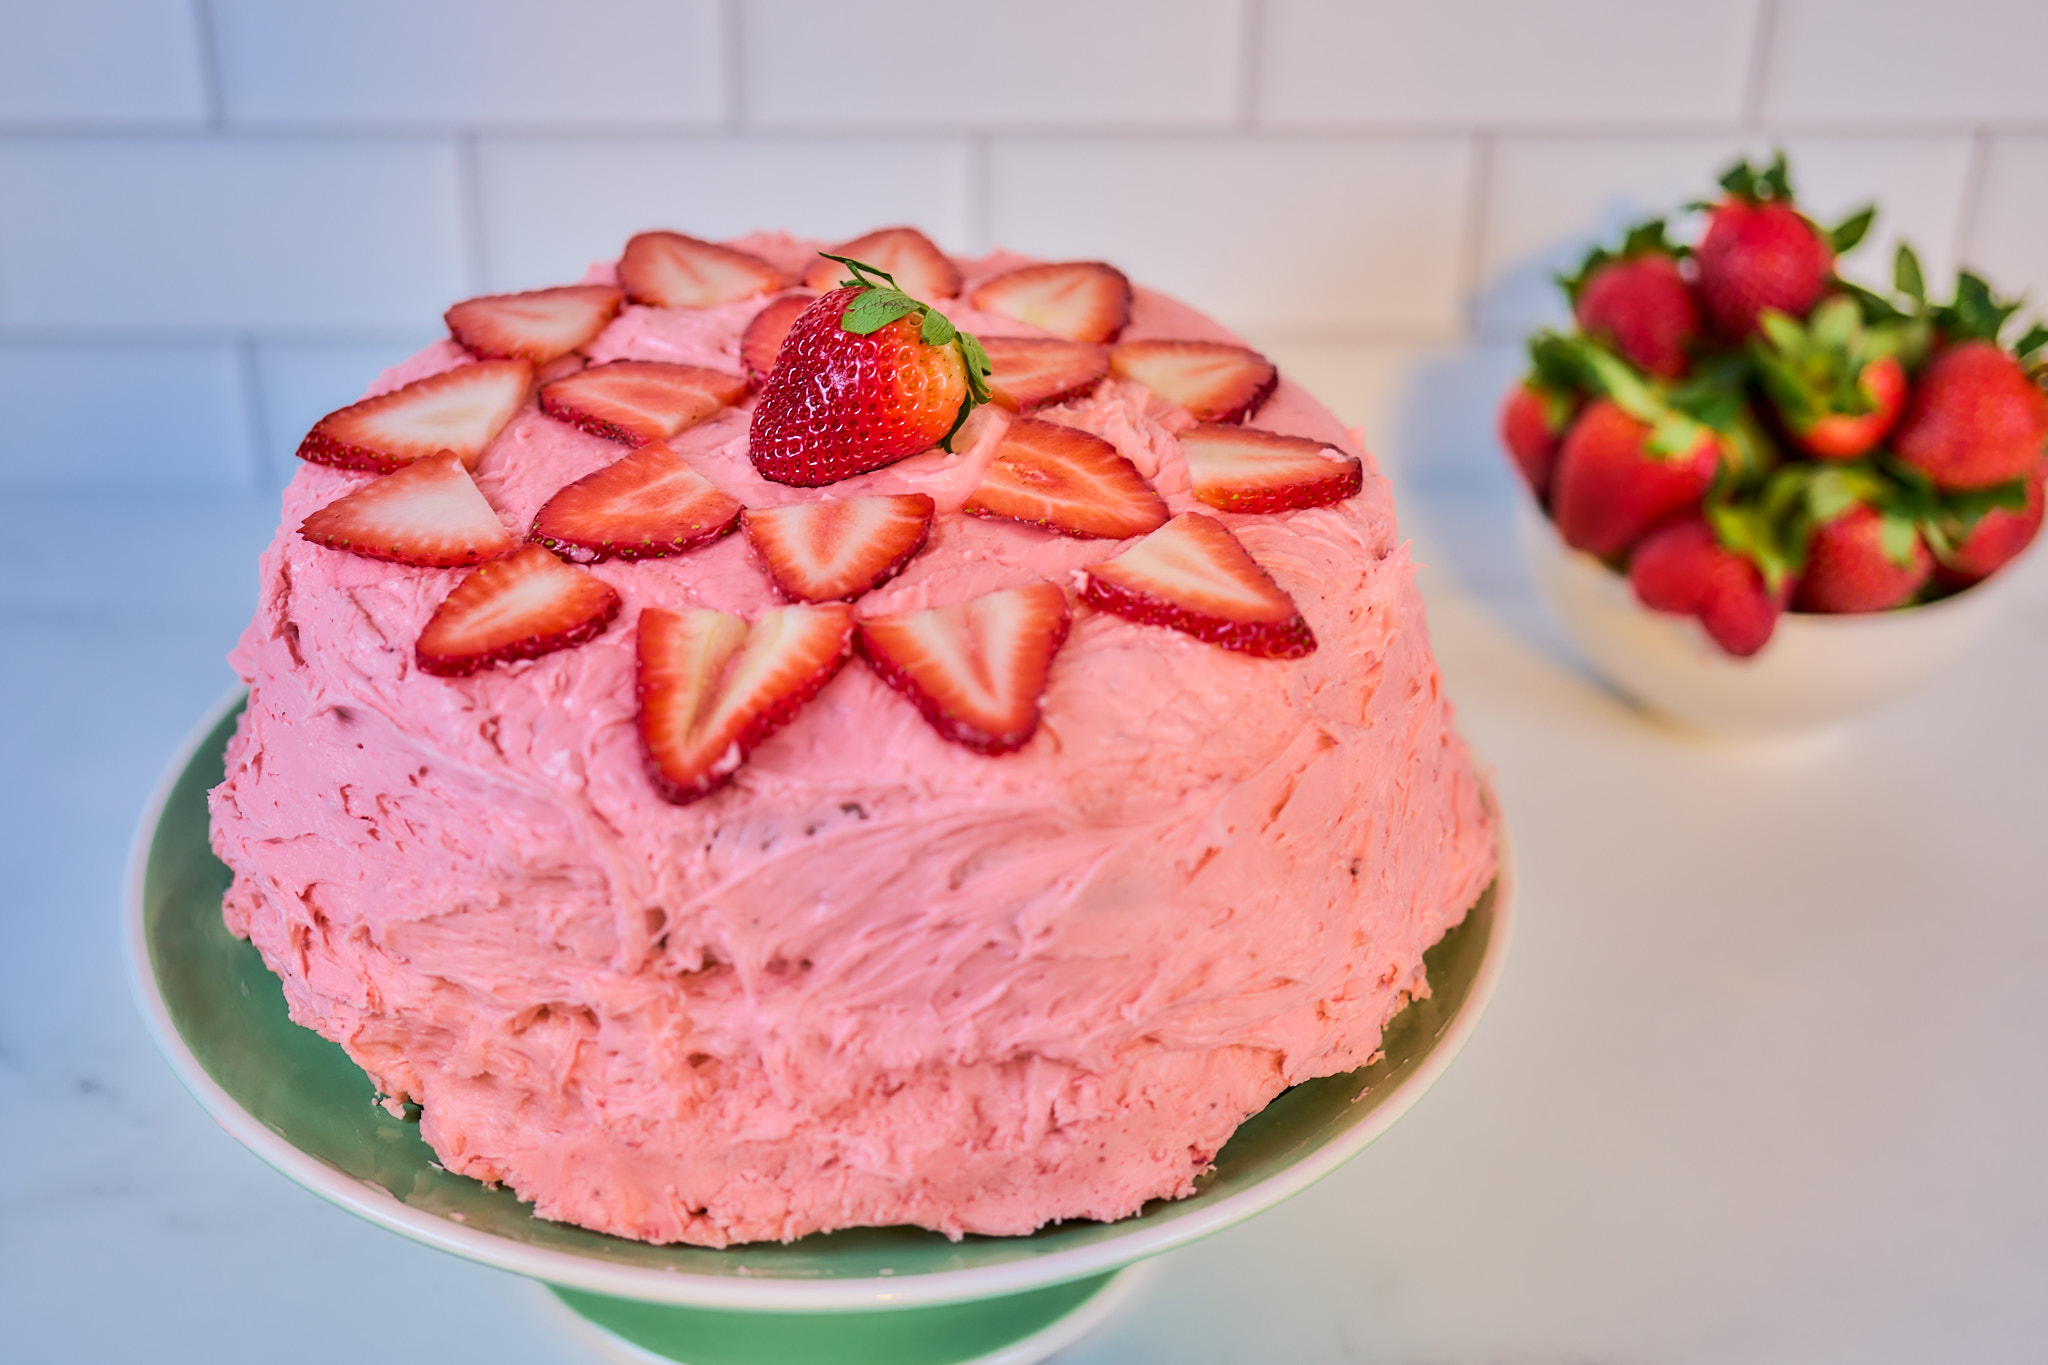 Vanilla Sheet Cake With Strawberry Glaze Recipe - The Washington Post